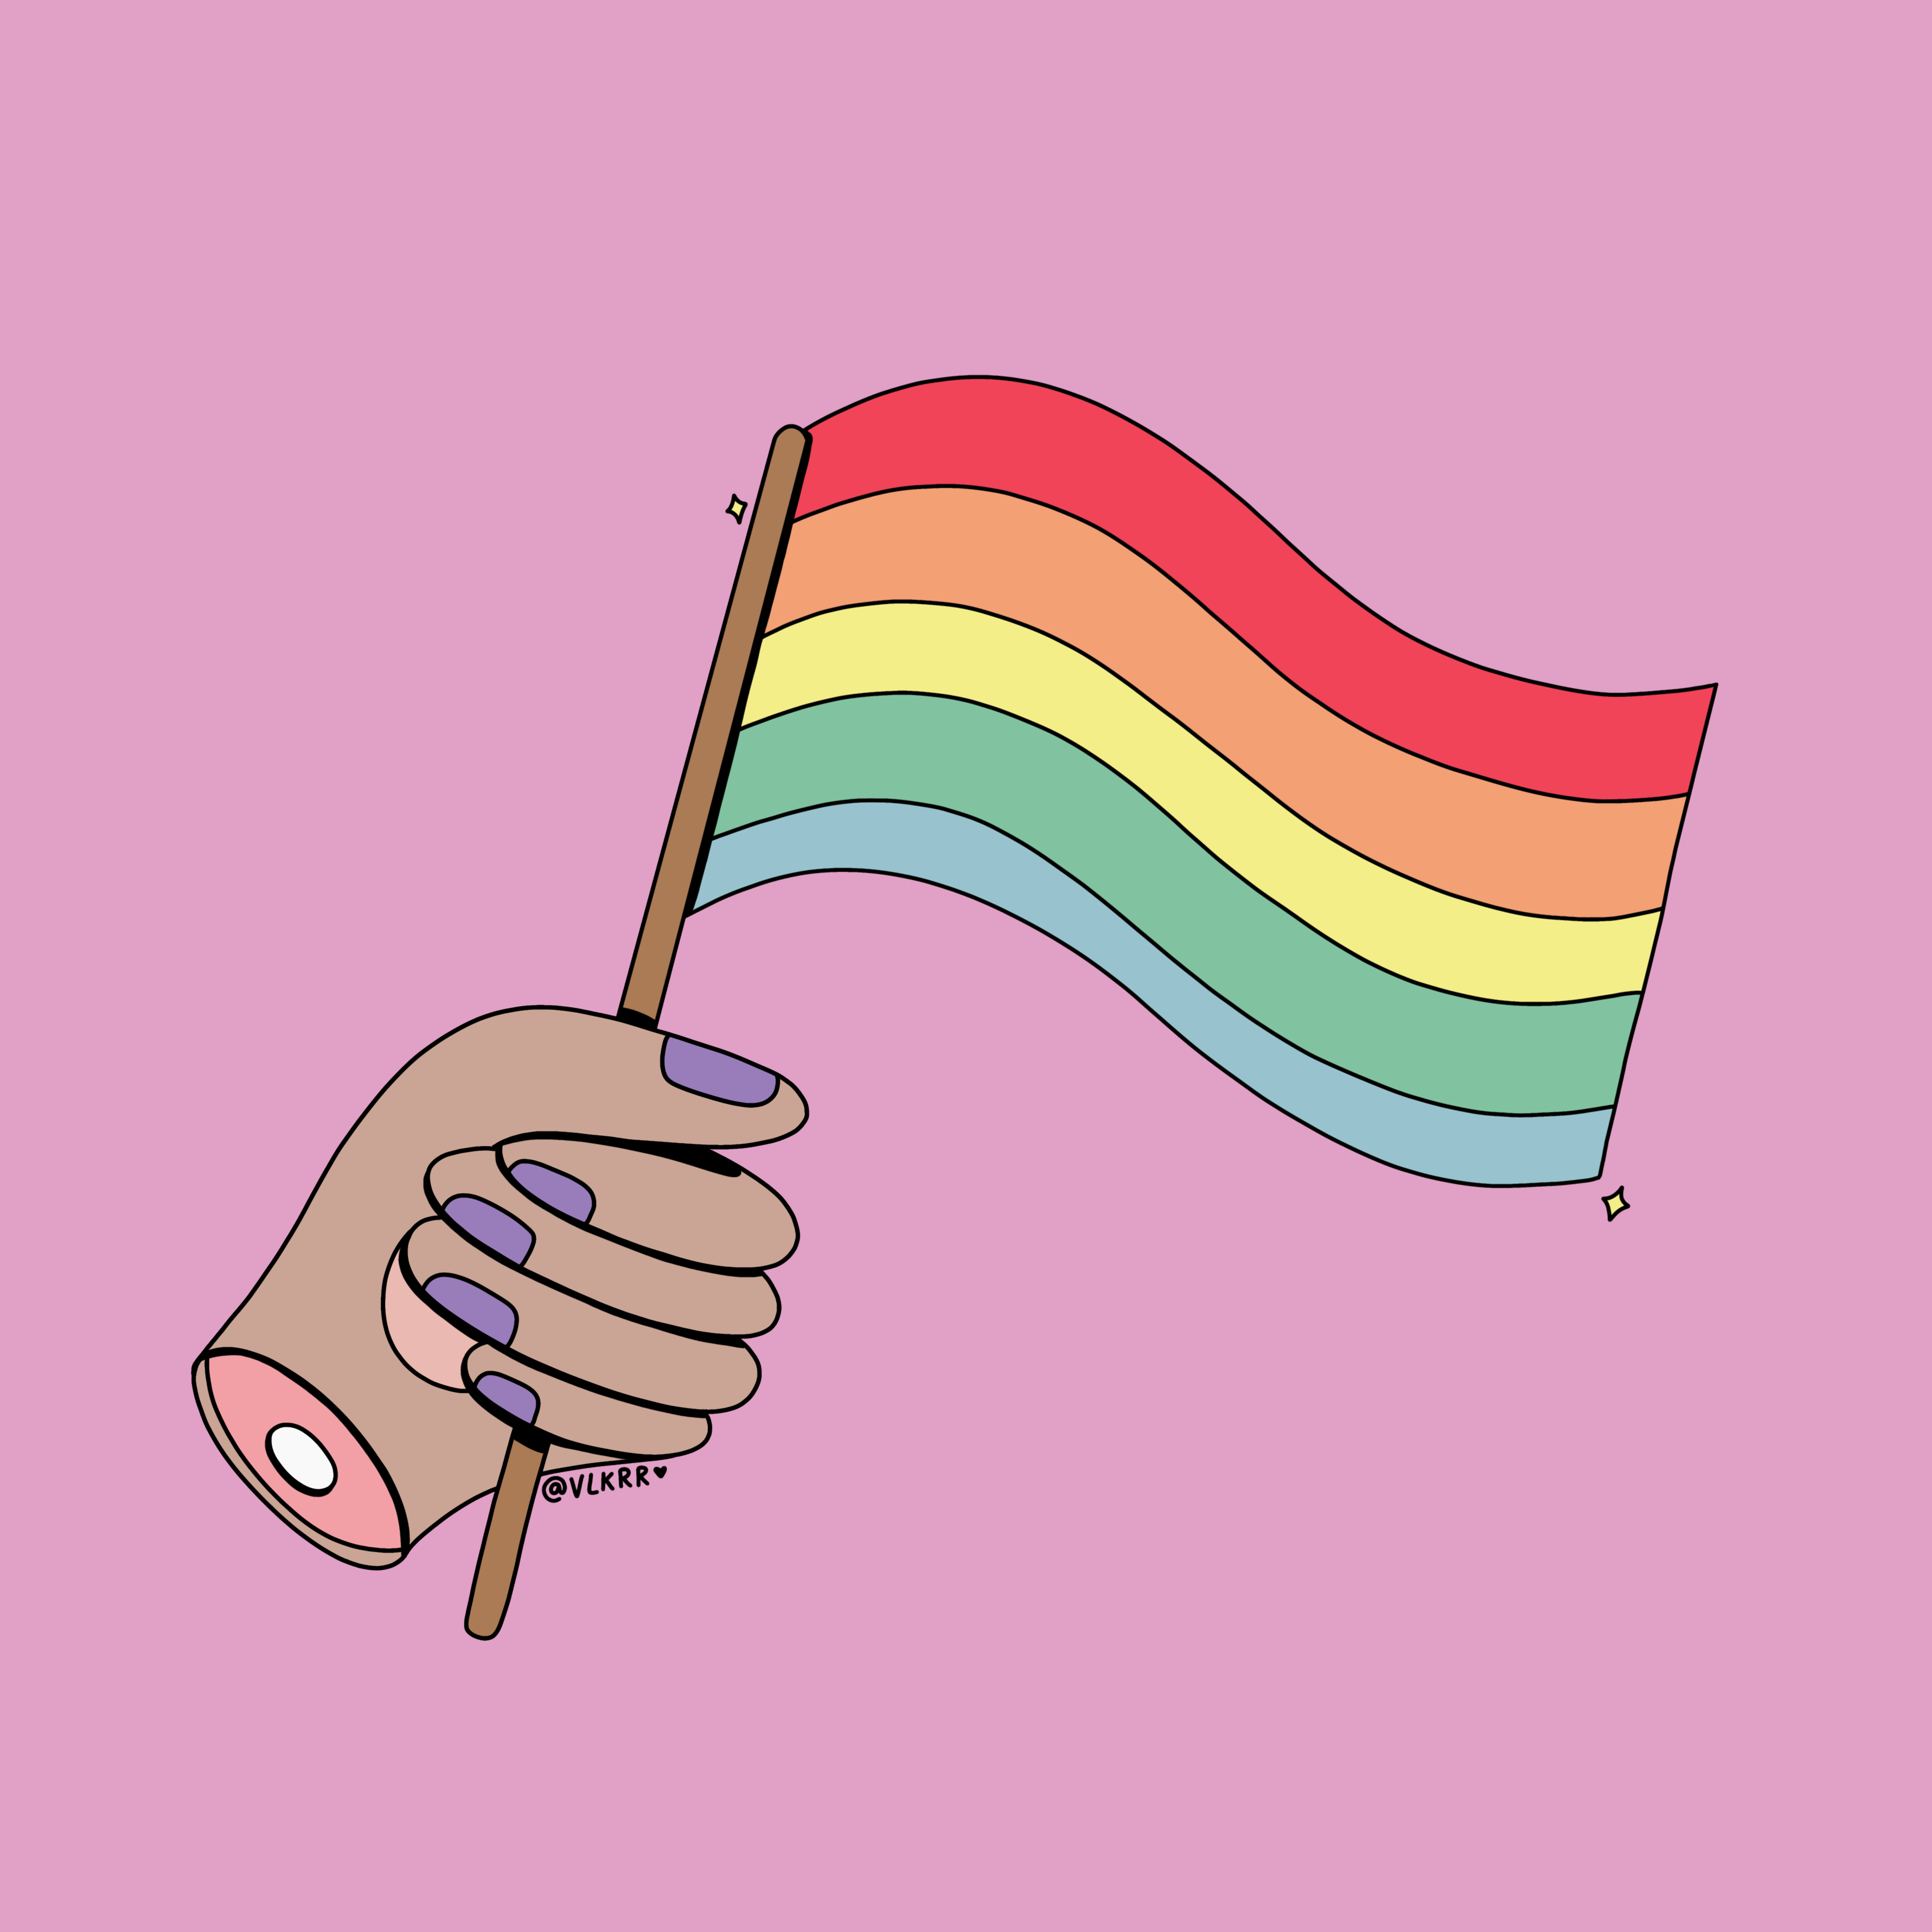 gay flag gif imagenes